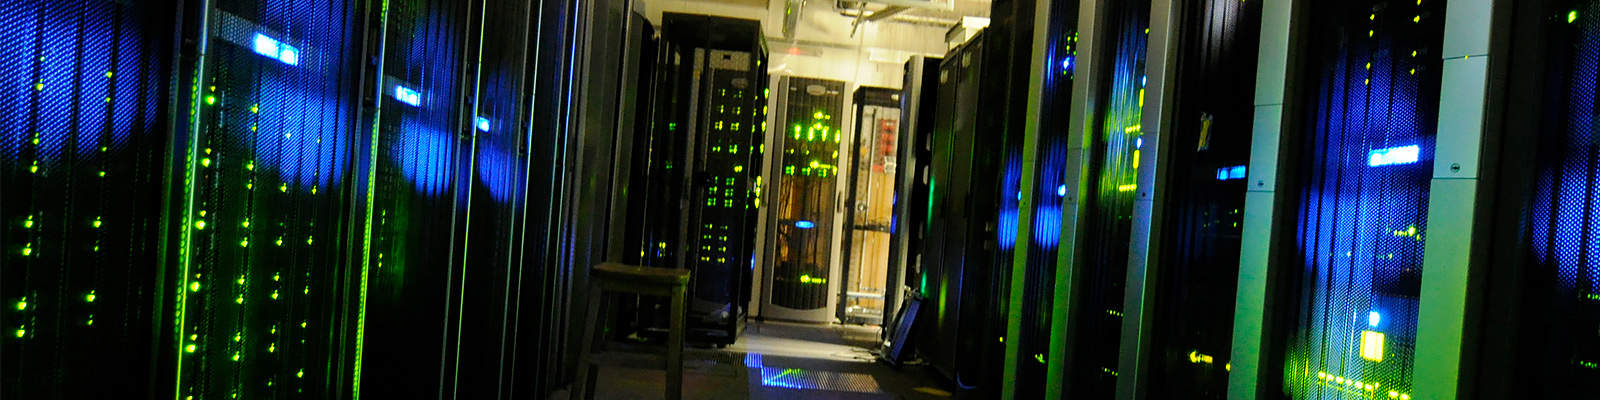 A rack of computer servers